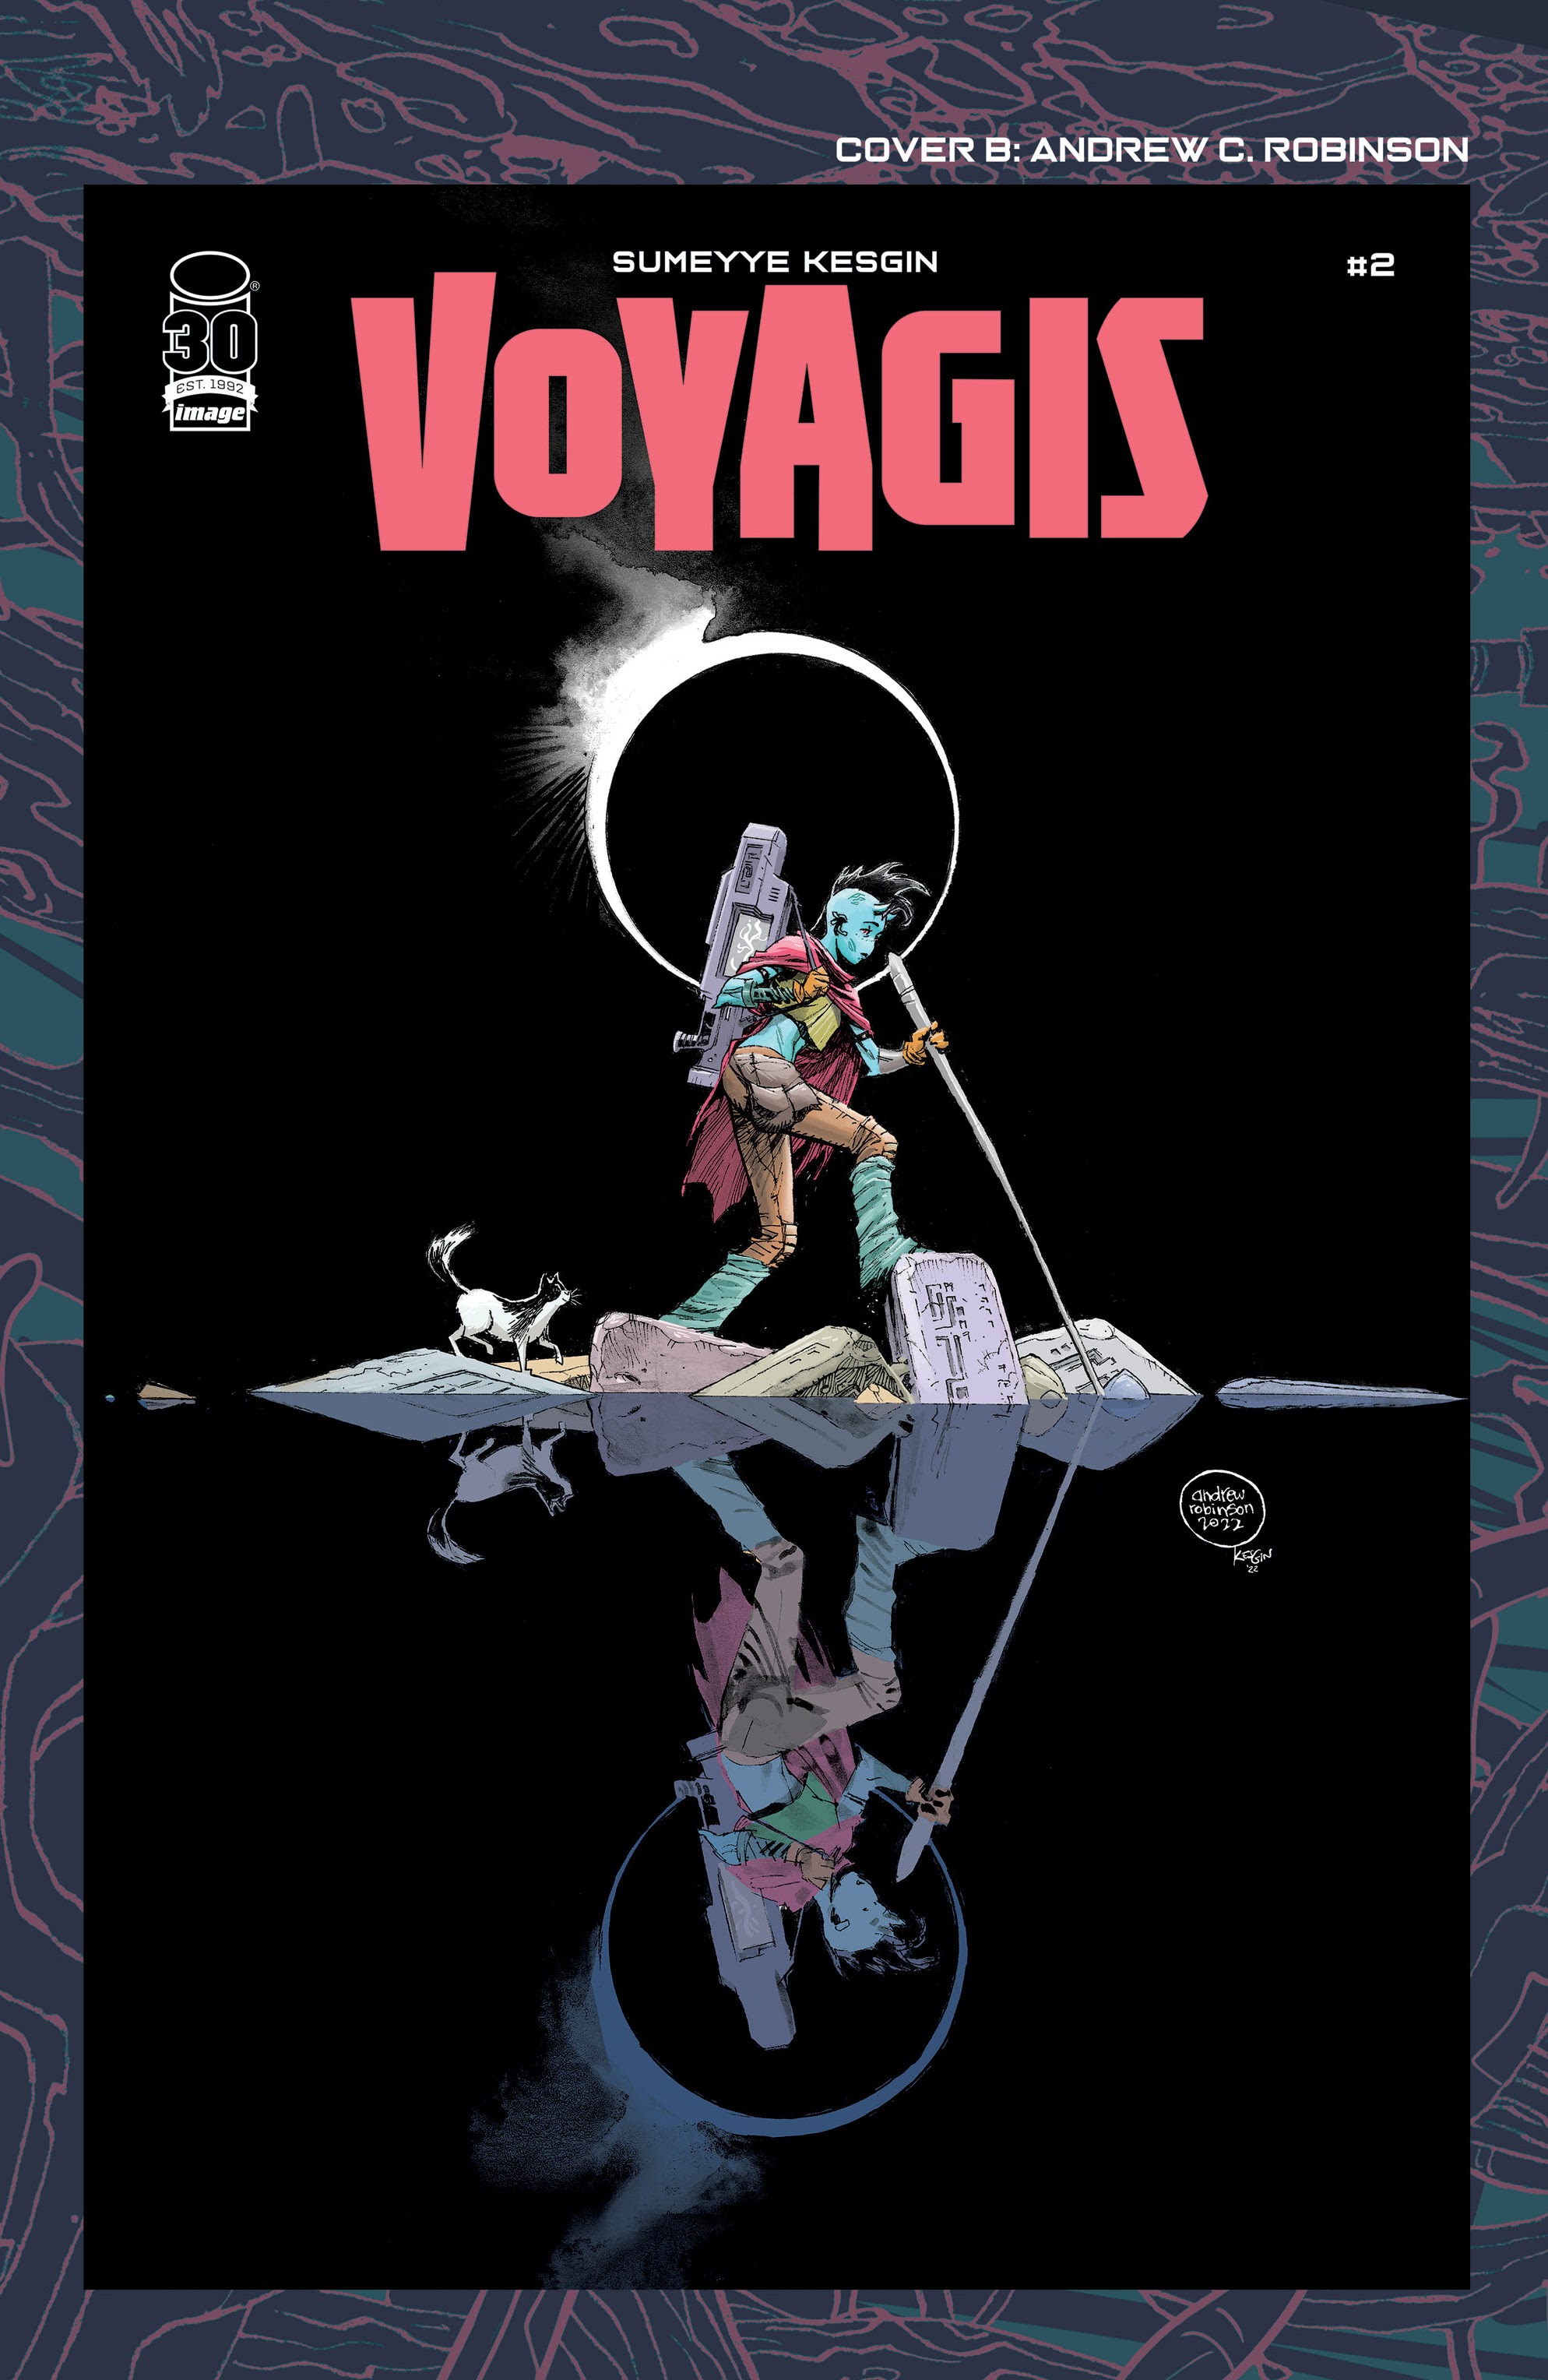 Read online Voyagis comic -  Issue #1 - 23